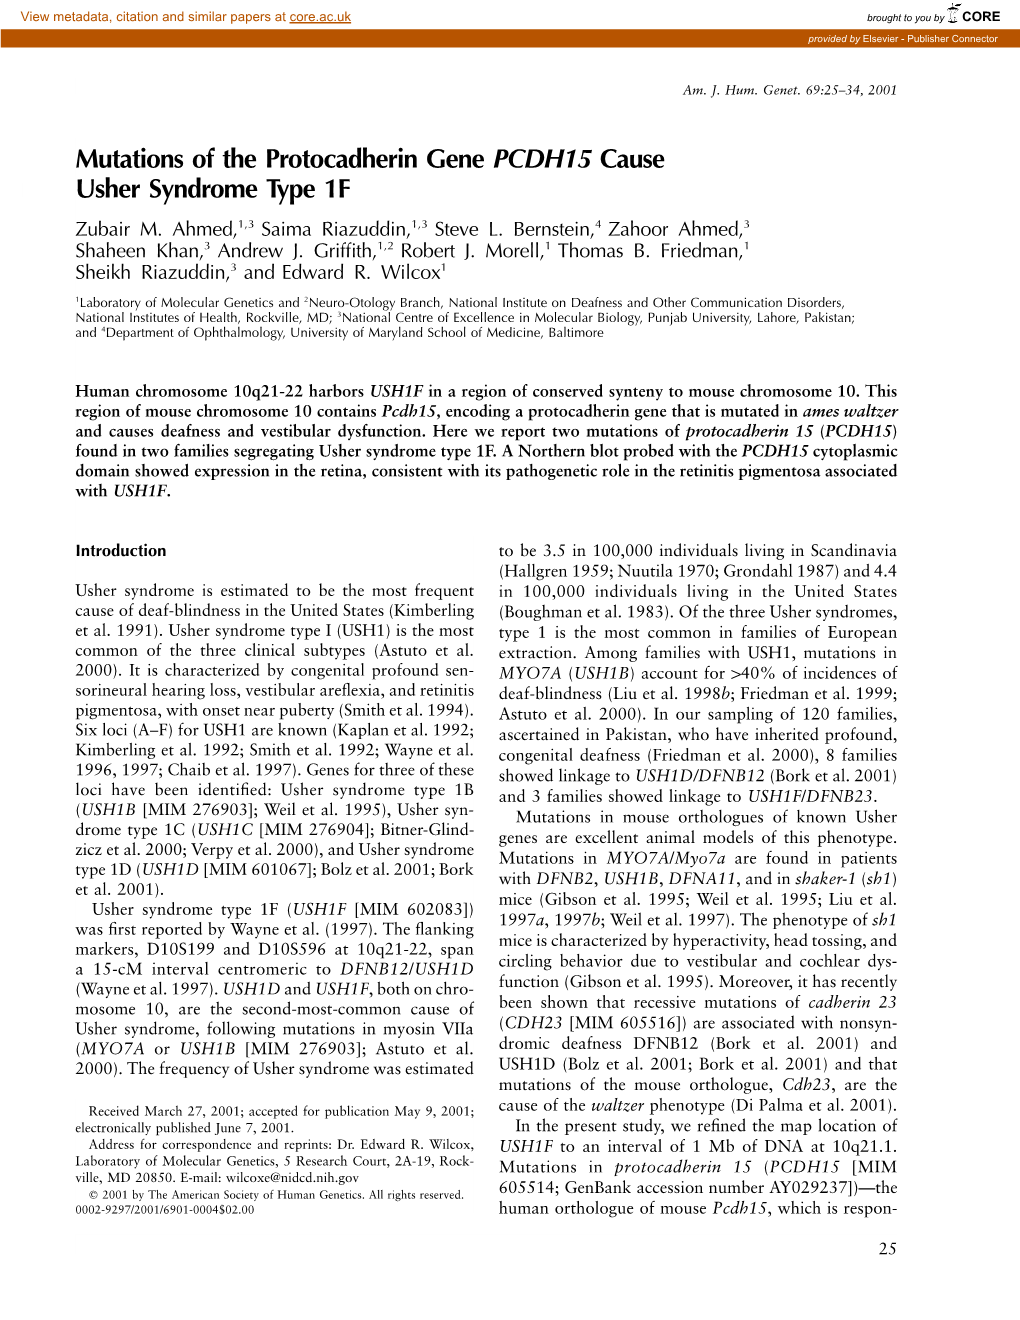 Mutations of the Protocadherin Gene PCDH15 Cause Usher Syndrome Type 1F Zubair M